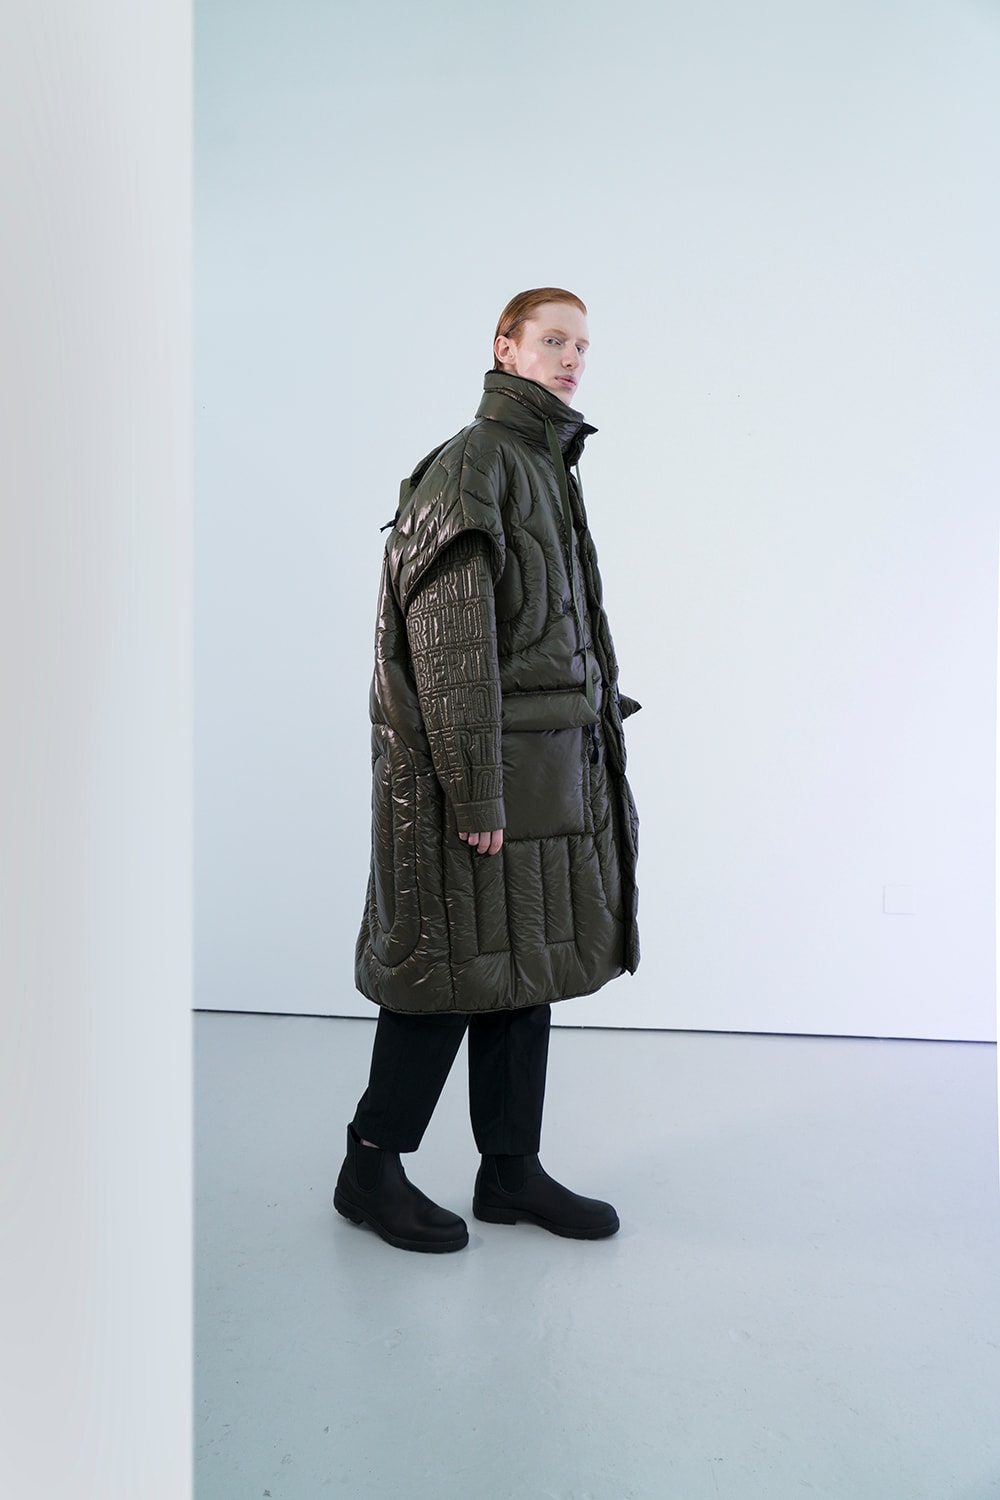 Berthold Fall/Winter 2018 Ed Fornieles London Fashion Week: Men's